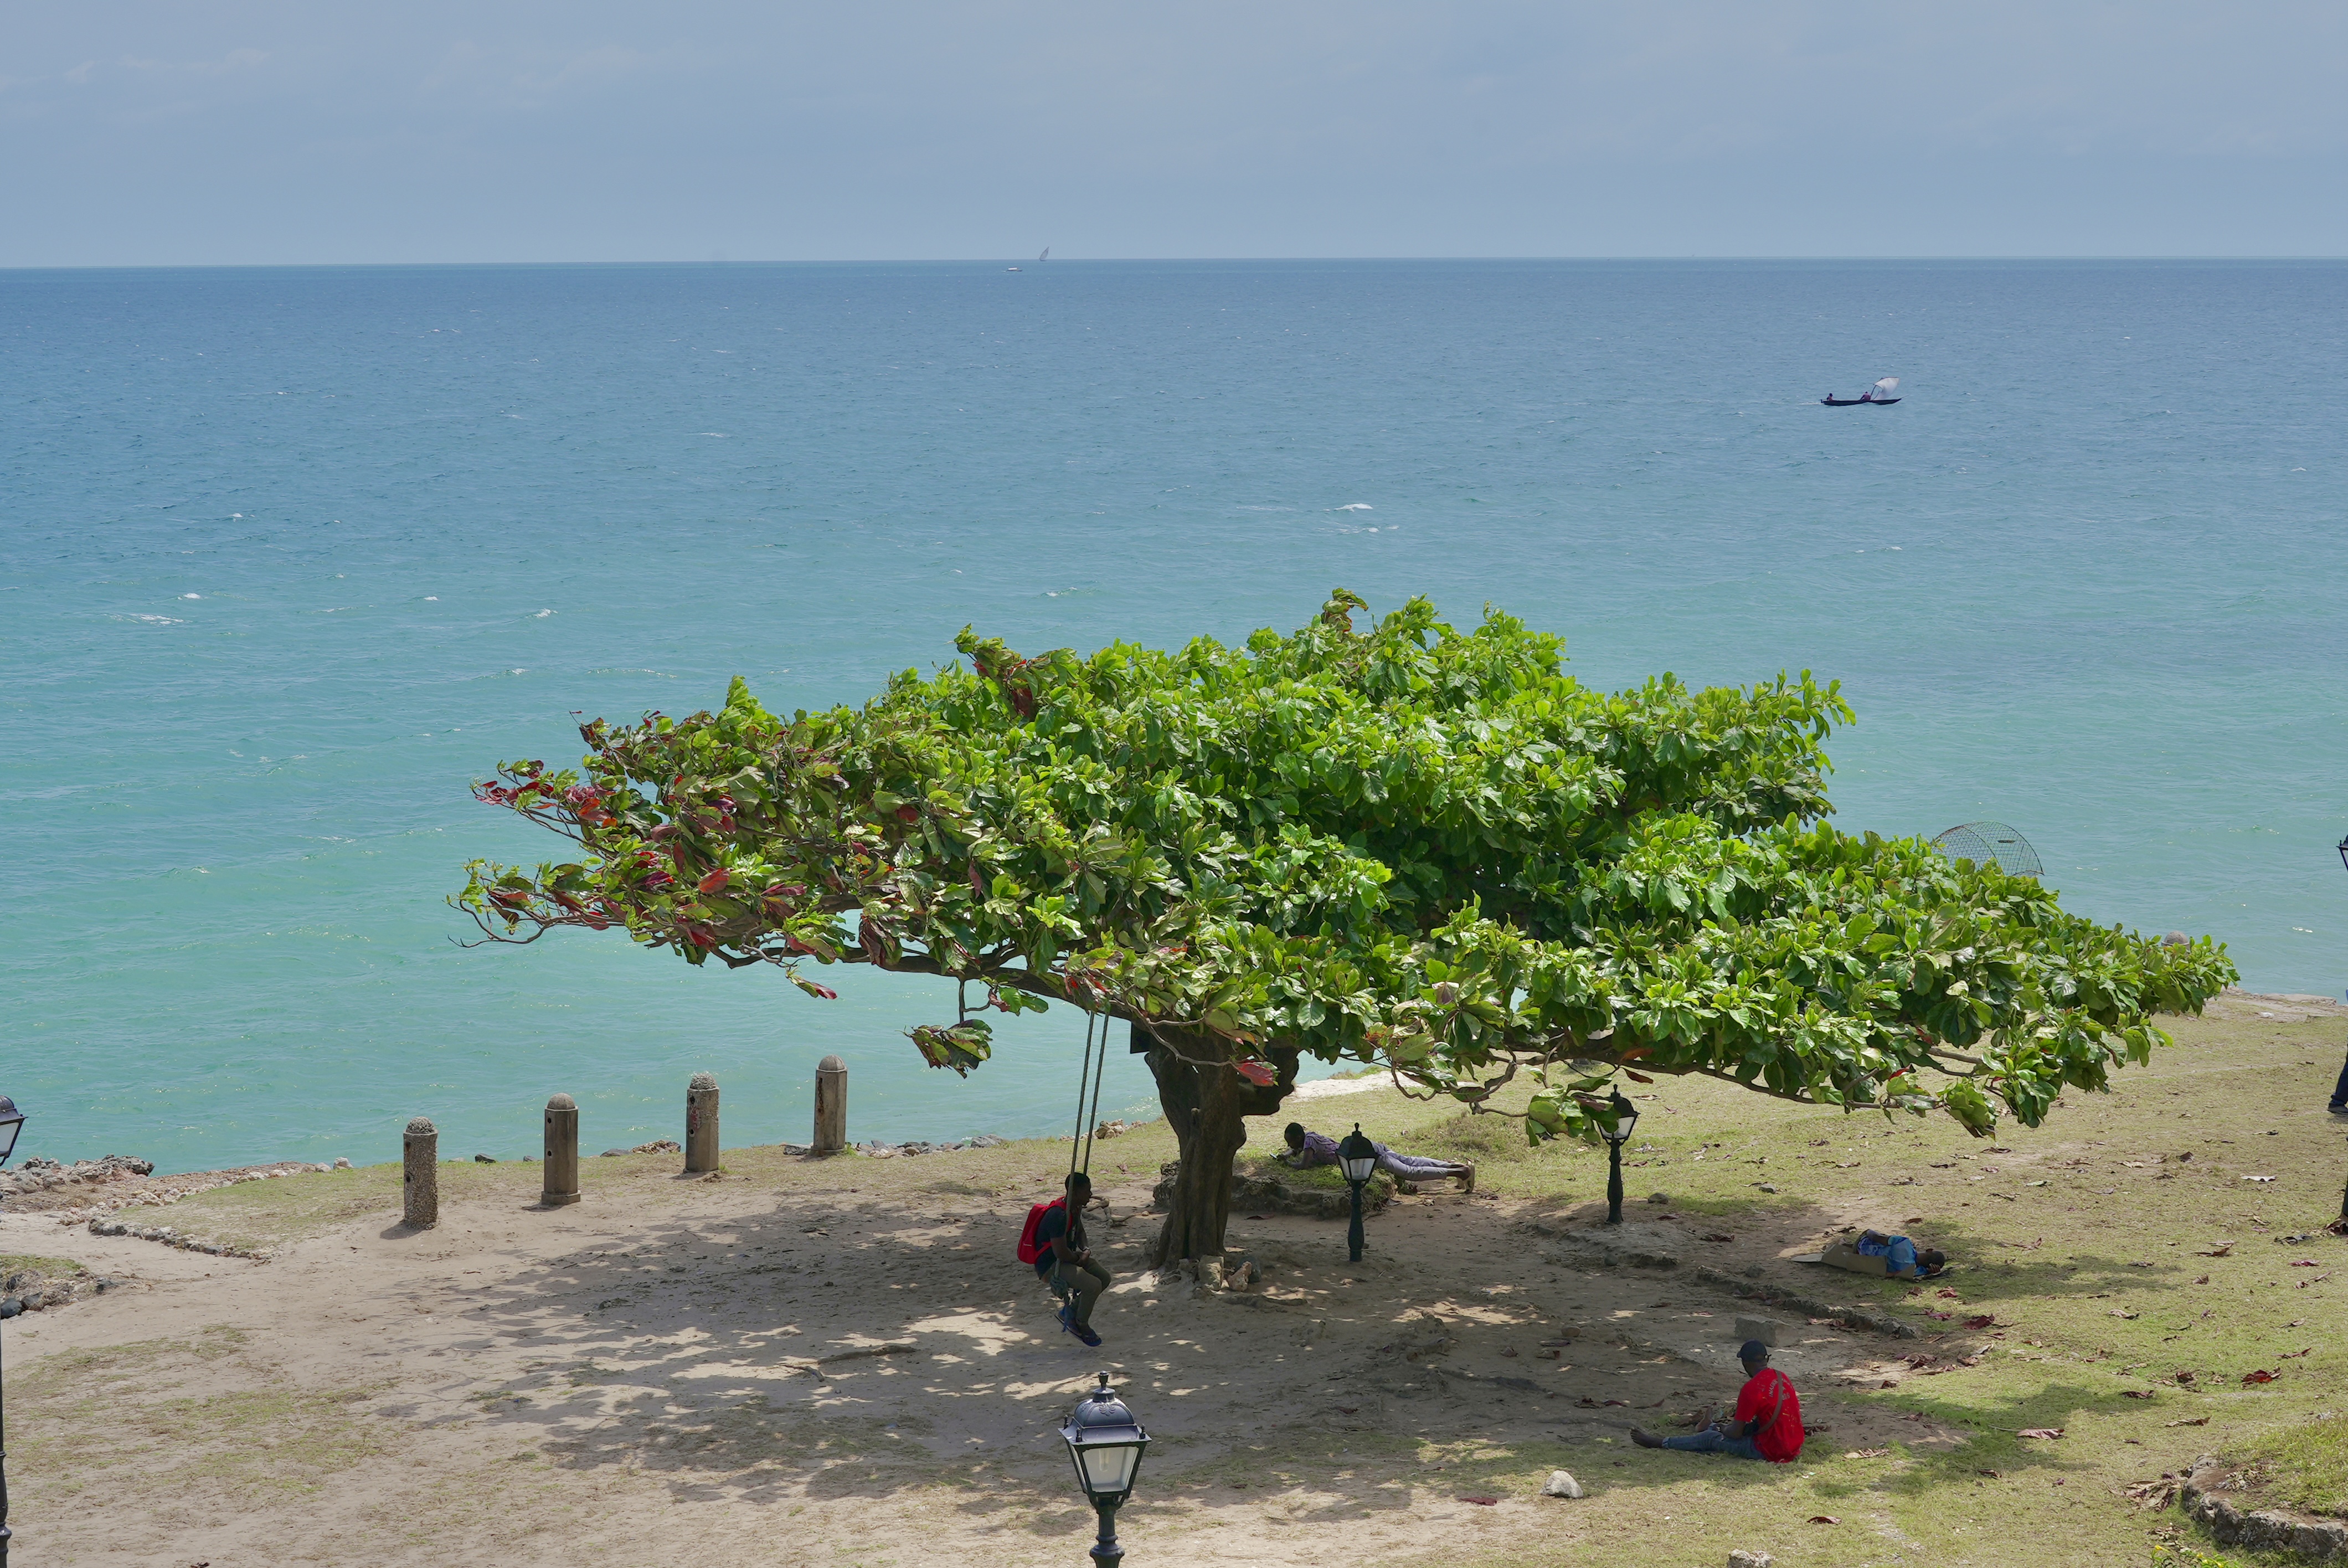 Local residents enjoy their leisure time on Zanzibar Island in Tanzania. /CGTN